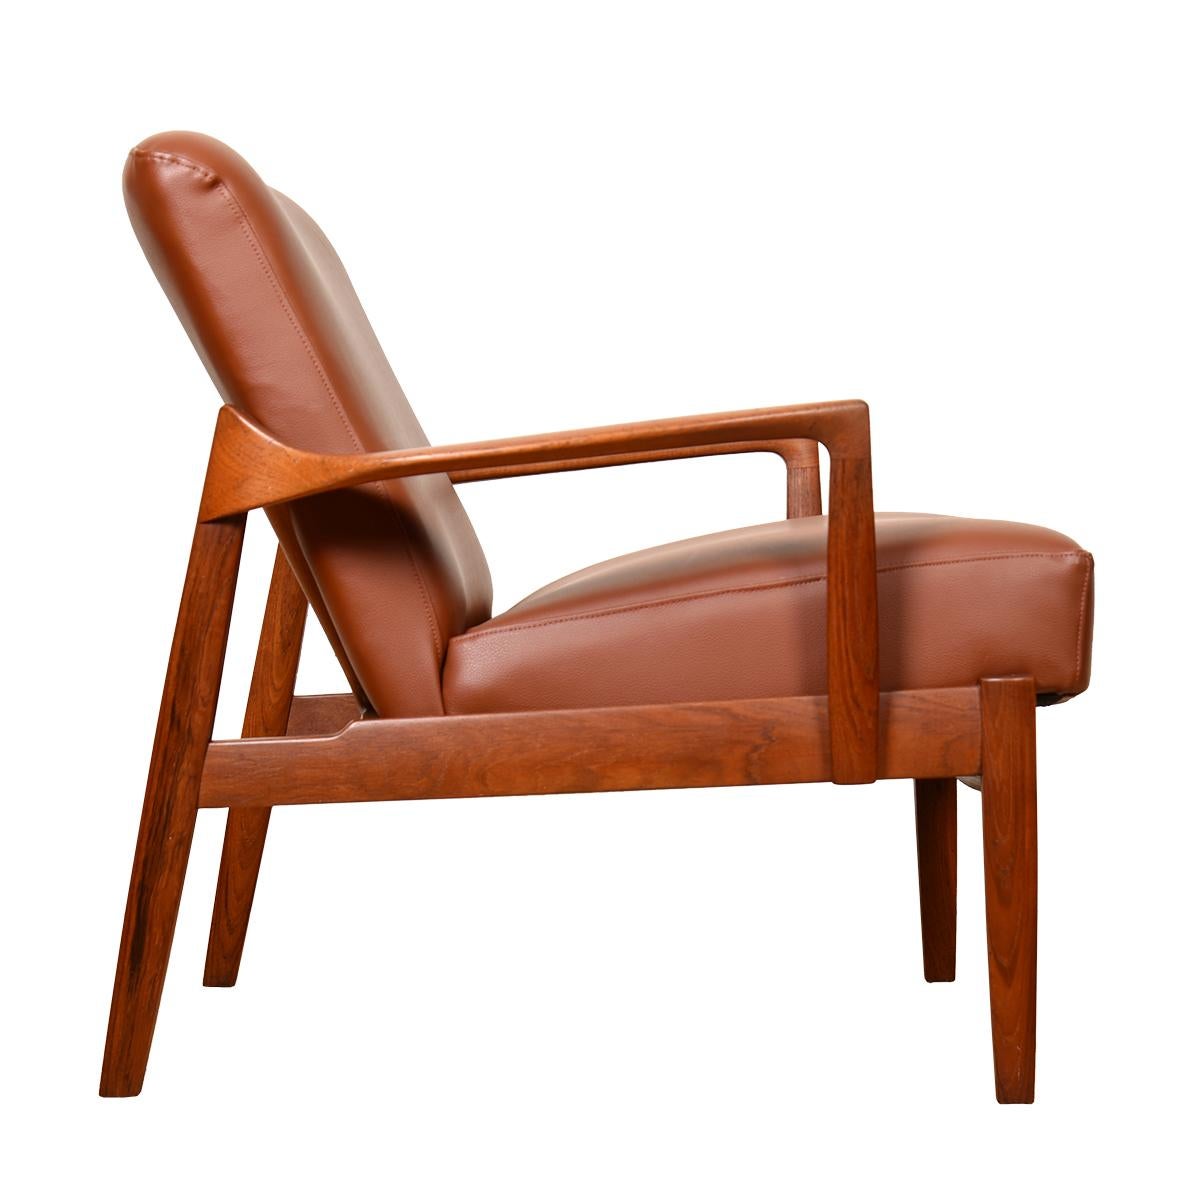 20th Century Danish Teak Frame + Leather Cushions Lounge Chair by Tove & Edvard Kindt-Larsen